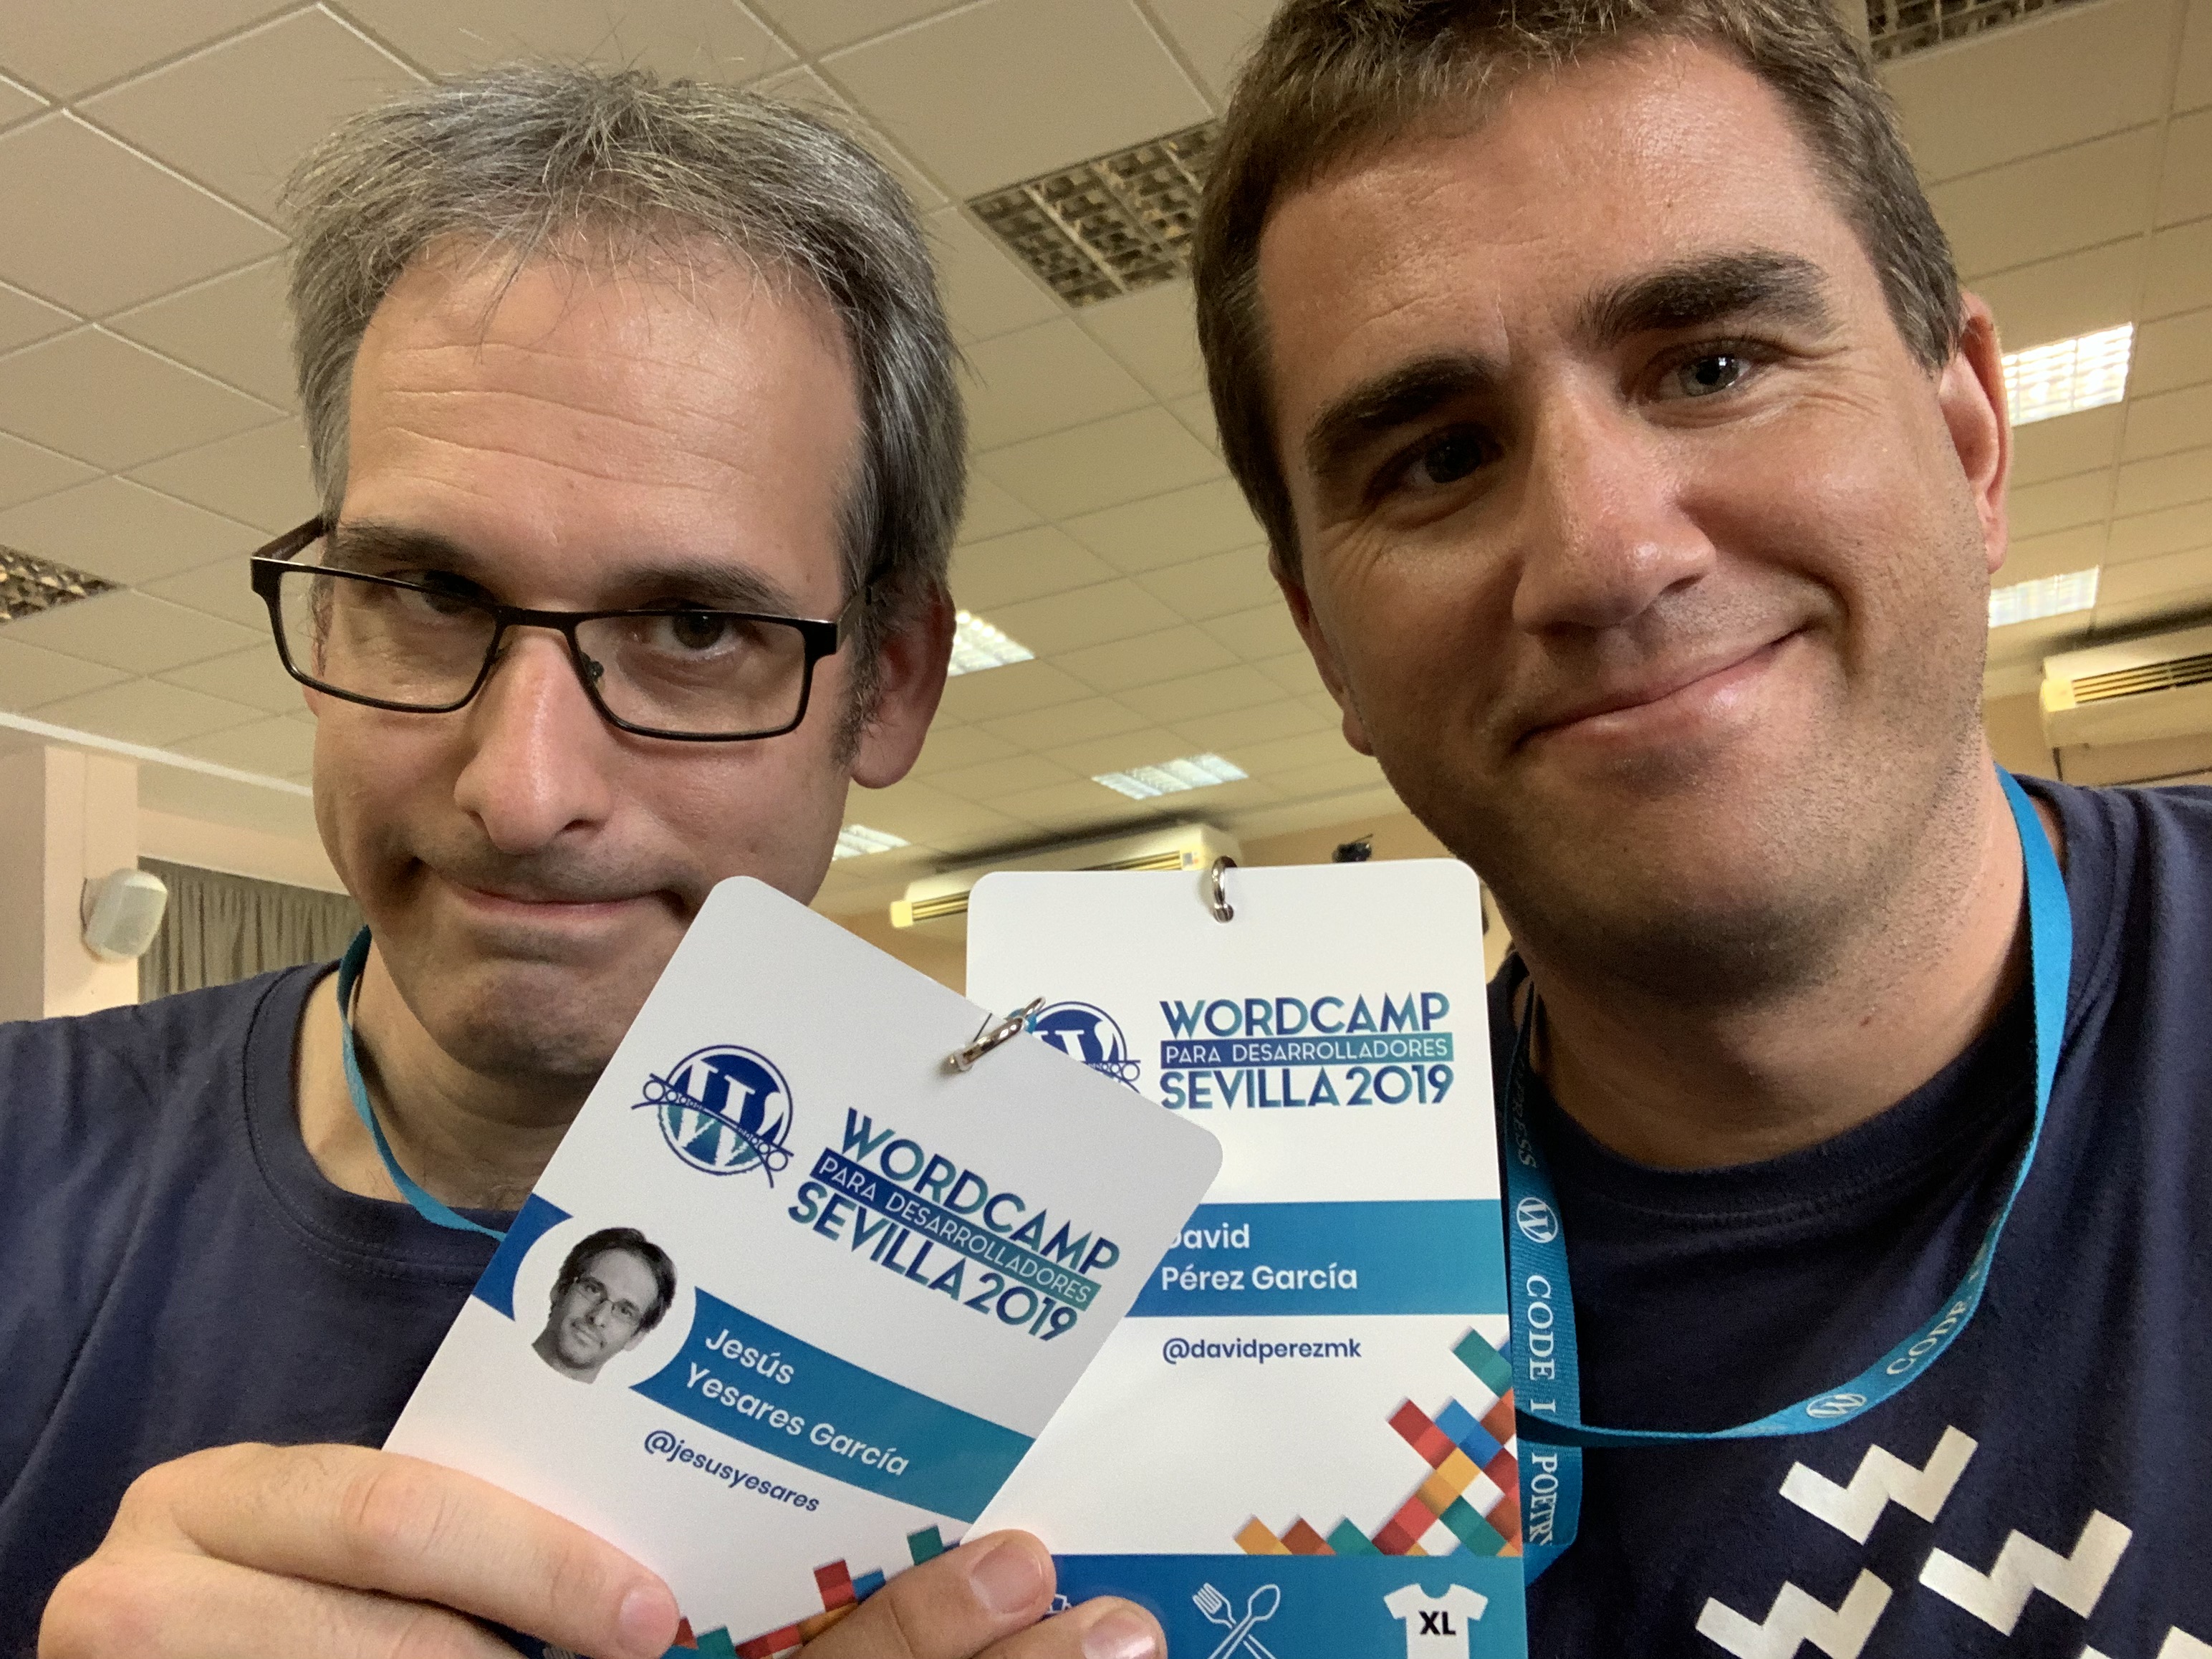 WordCamp Sevilla para desarrolladores – Día 1 Talleres